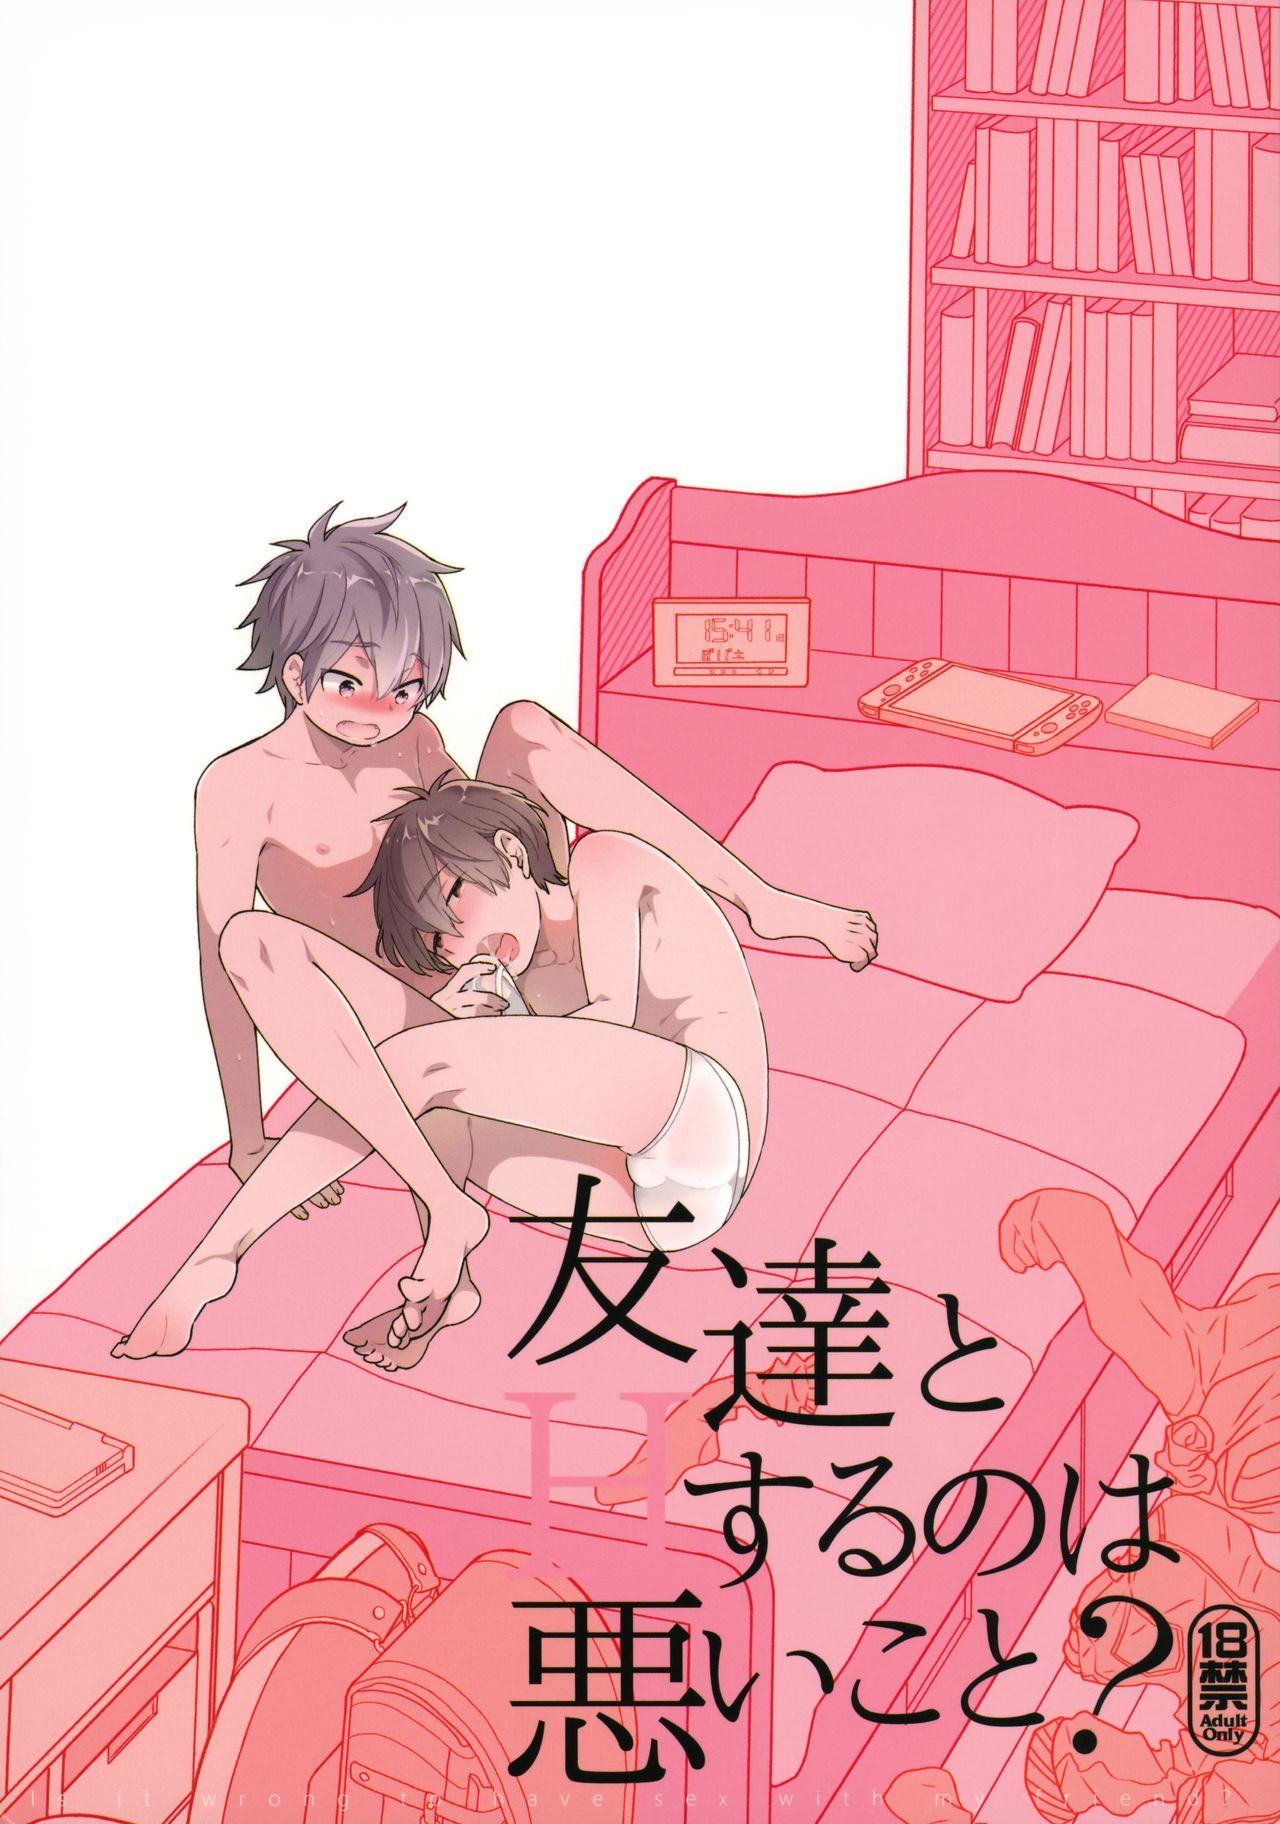 Toys Tomodachi to Suru no wa Warui Koto? - Is it wrong to have sex with my friend? - Original Ruiva - Page 1